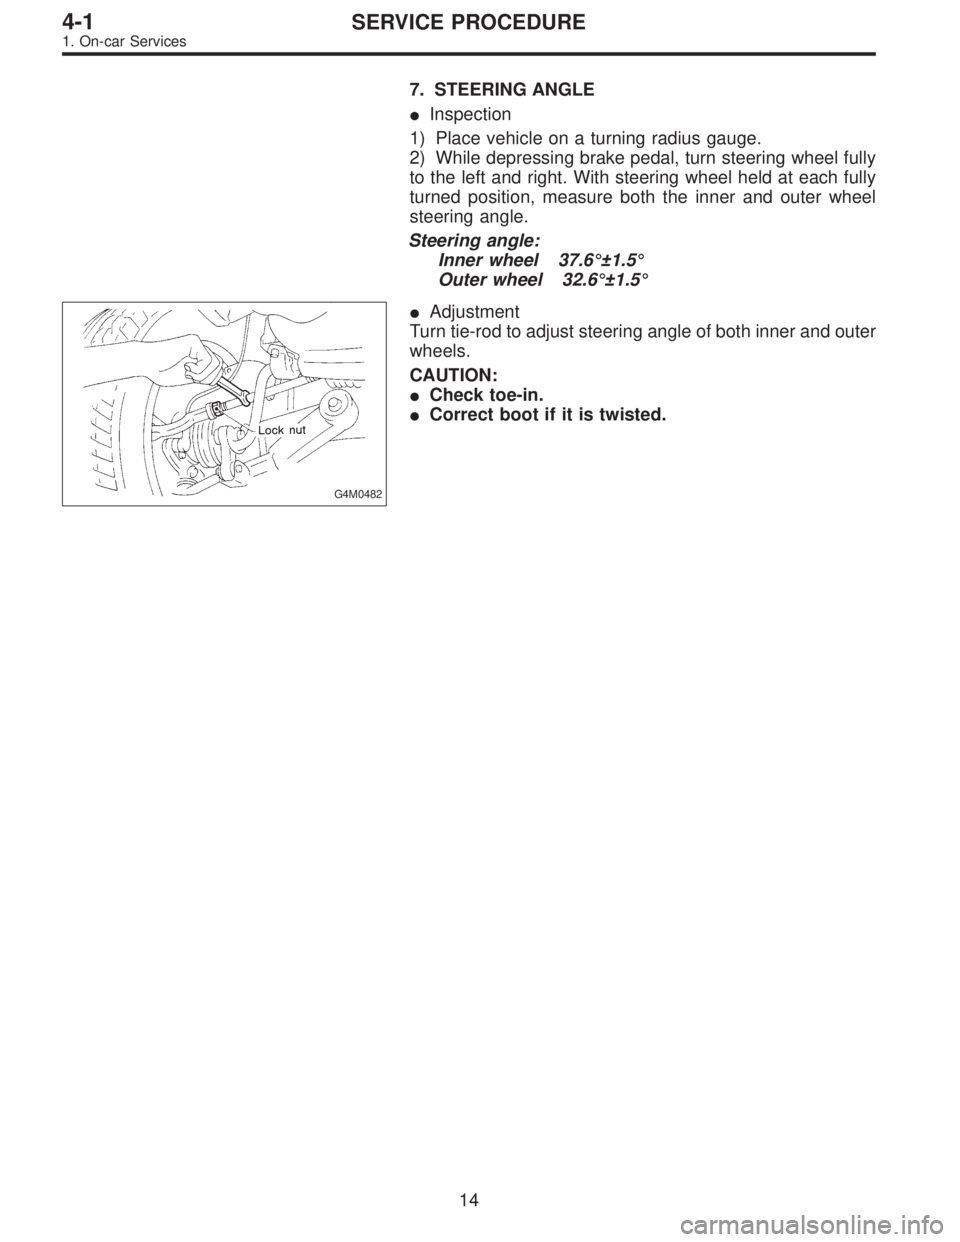 SUBARU LEGACY 1995  Service Repair Manual 7. STEERING ANGLE
Inspection
1) Place vehicle on a turning radius gauge.
2) While depressing brake pedal, turn steering wheel fully
to the left and right. With steering wheel held at each fully
turne